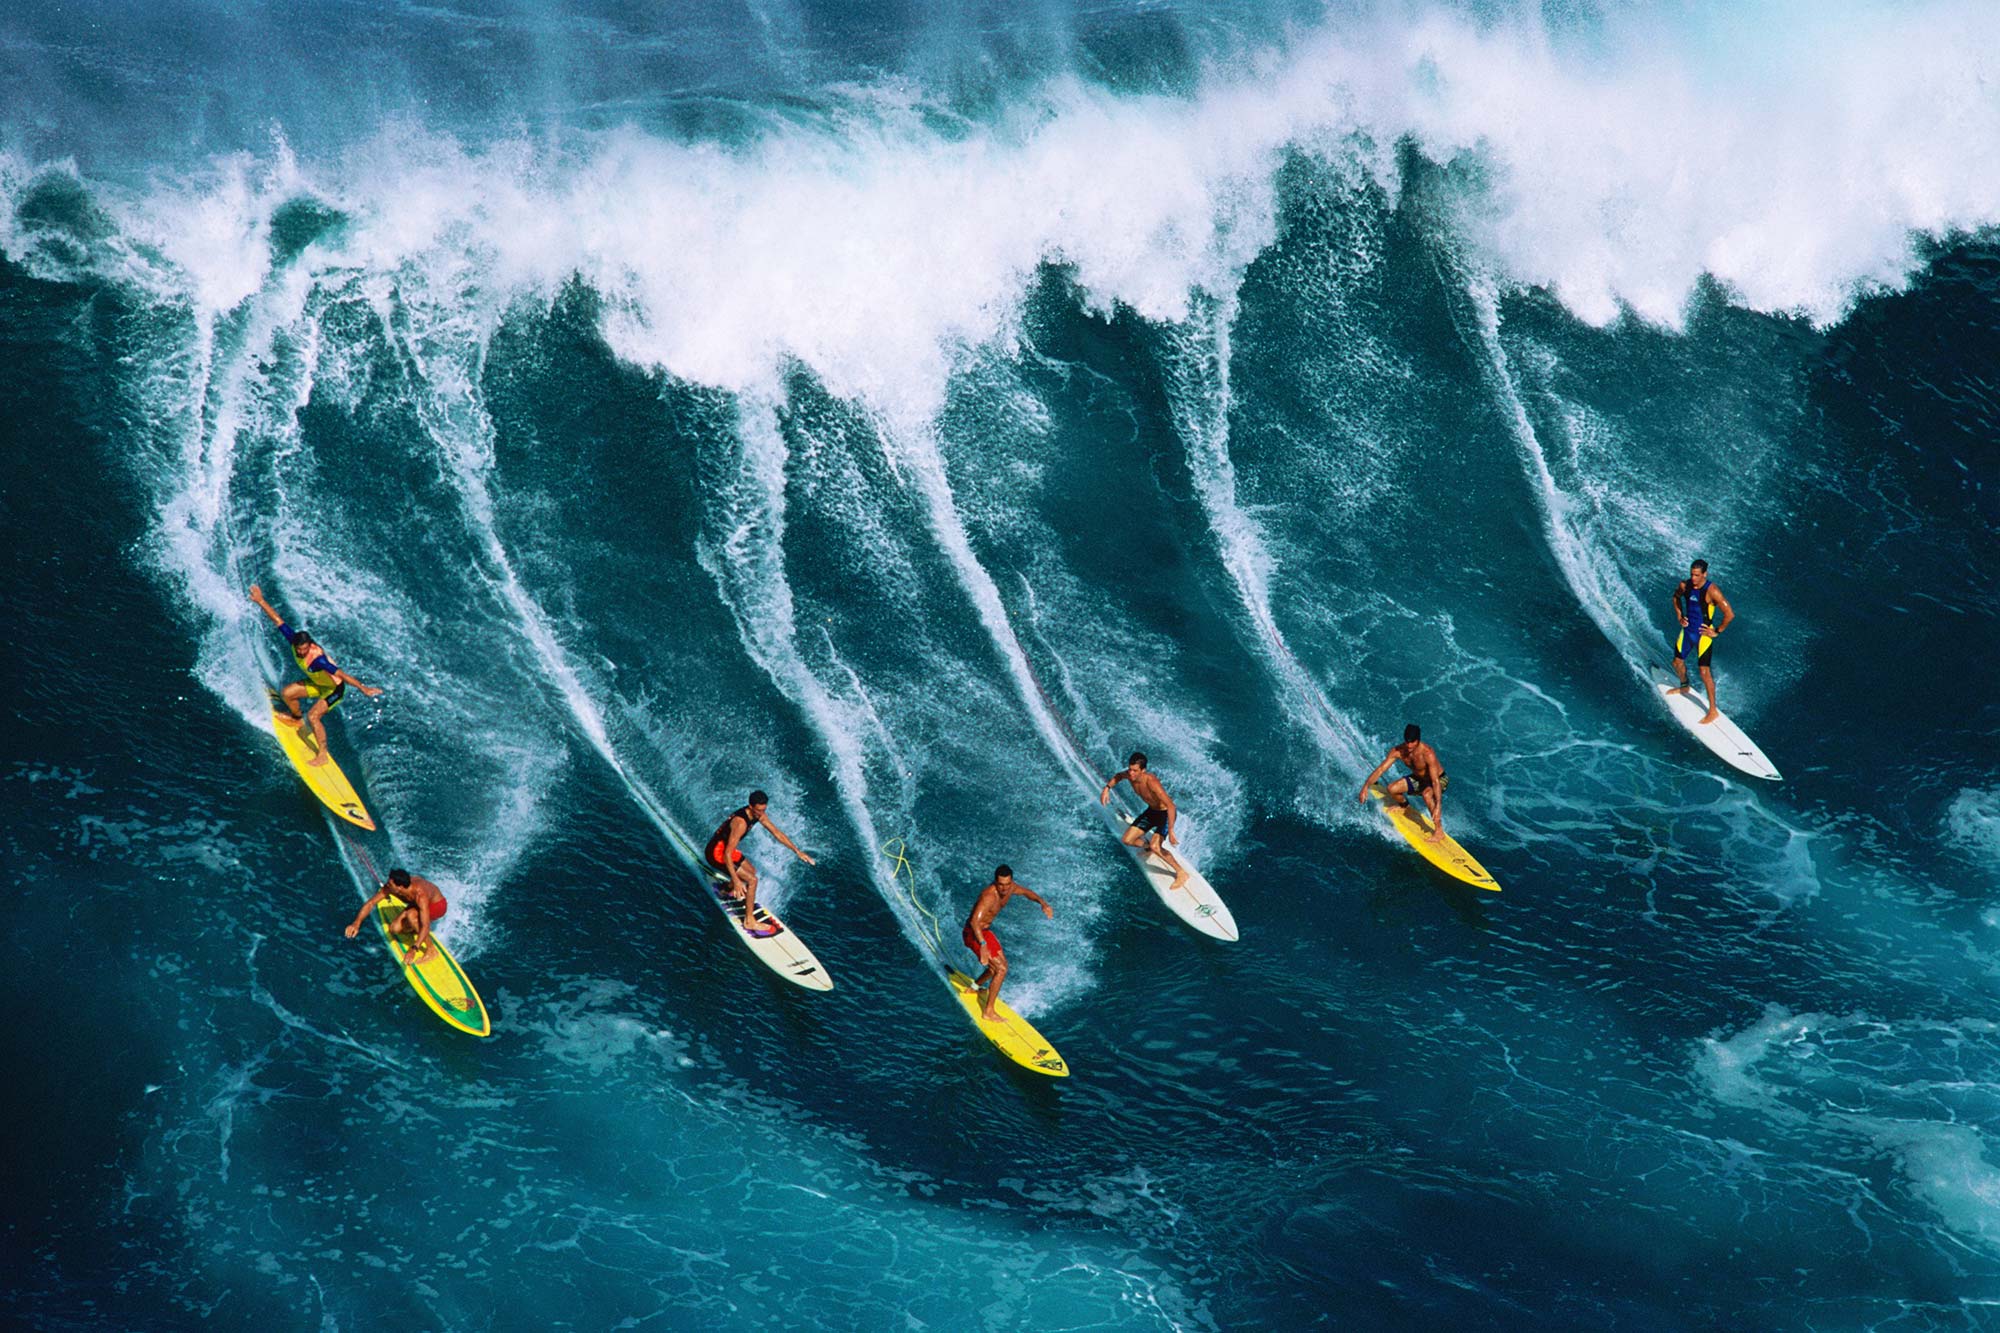 Seven surfers riding large wave